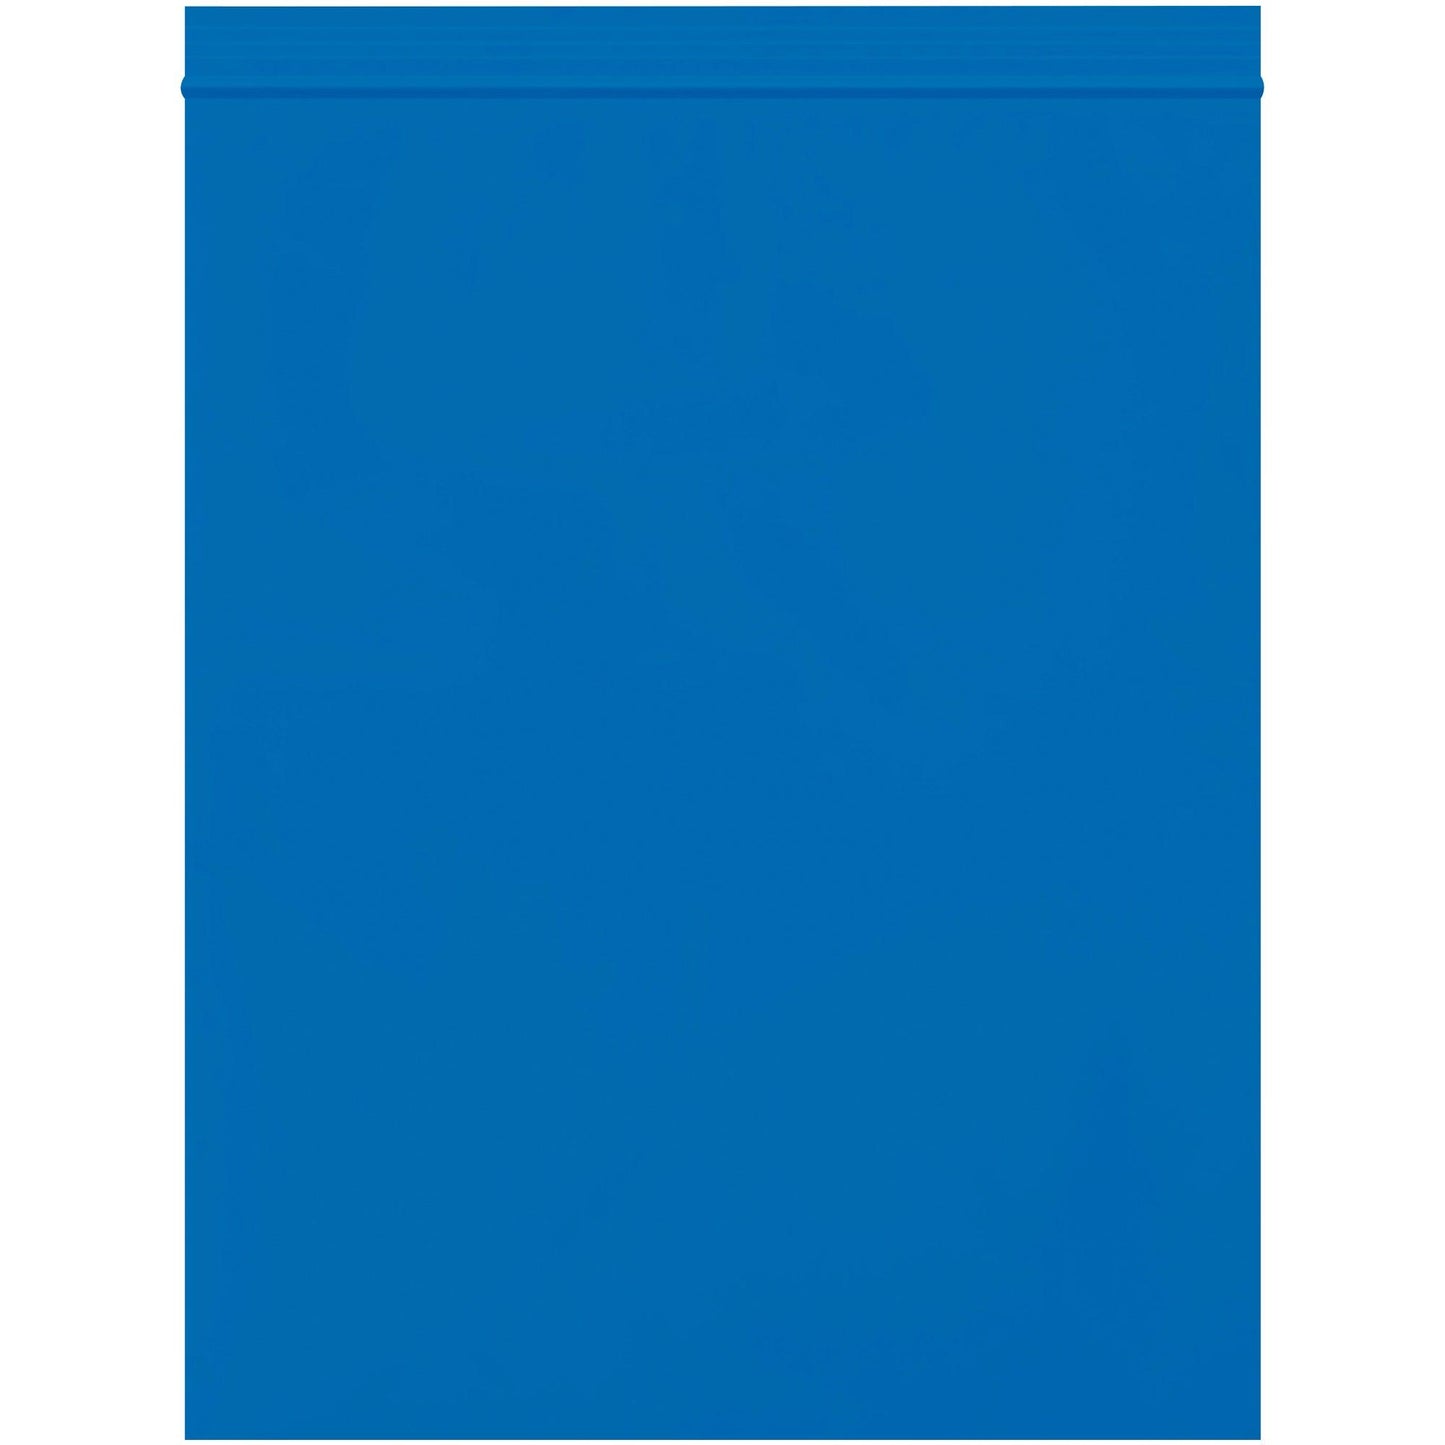 8 x 10" - 2 Mil Blue Reclosable Poly Bags - PB3635BL